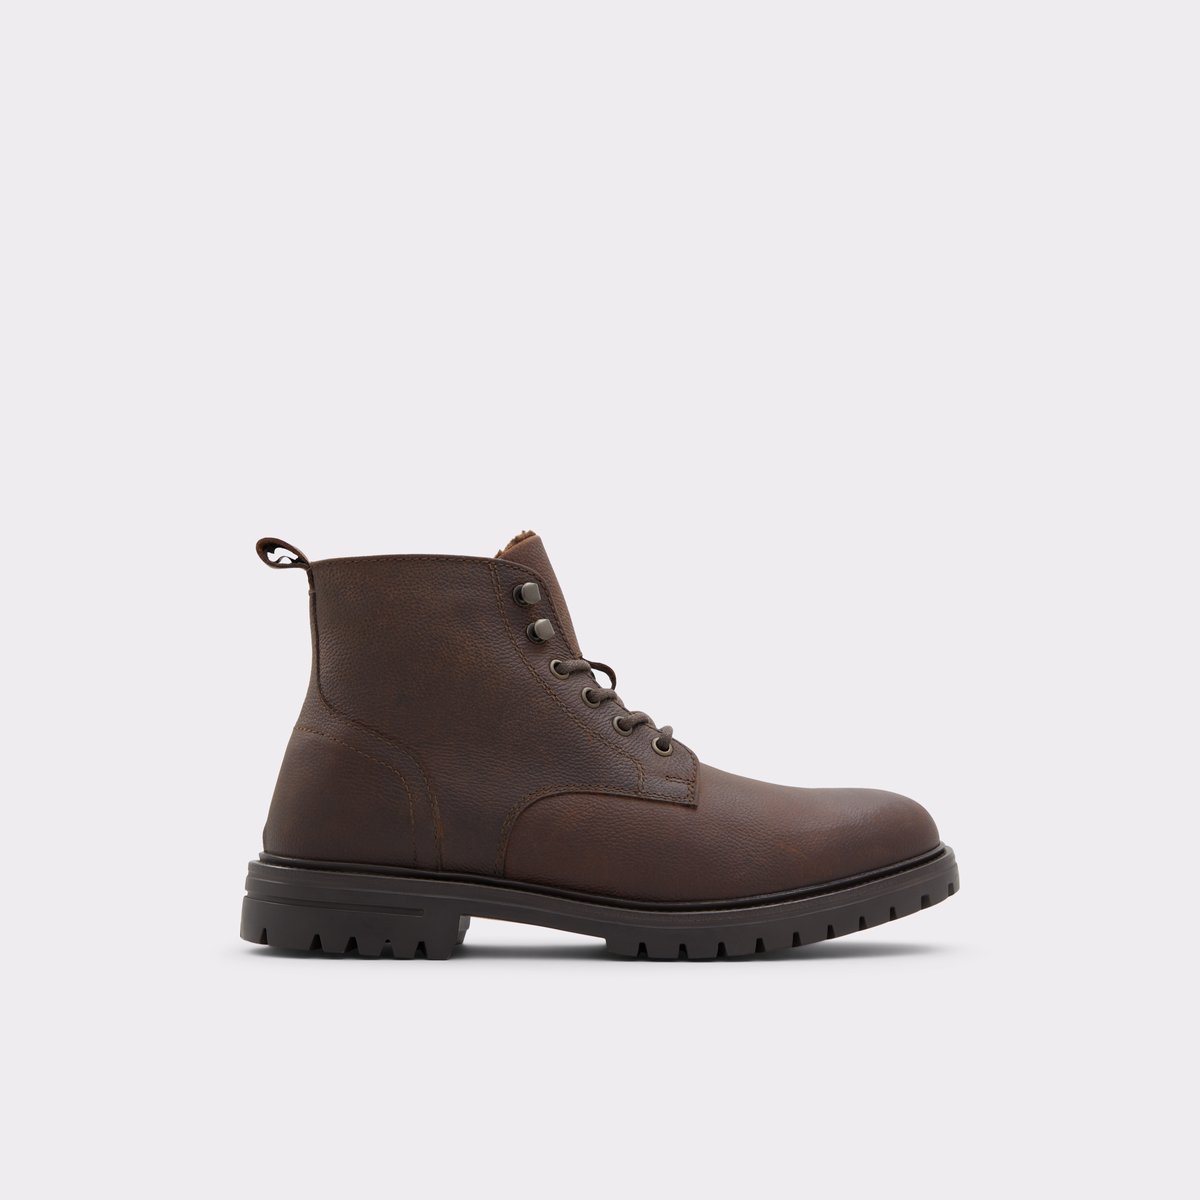 Laured-l Dark Brown Men's Casual boots | ALDO Canada